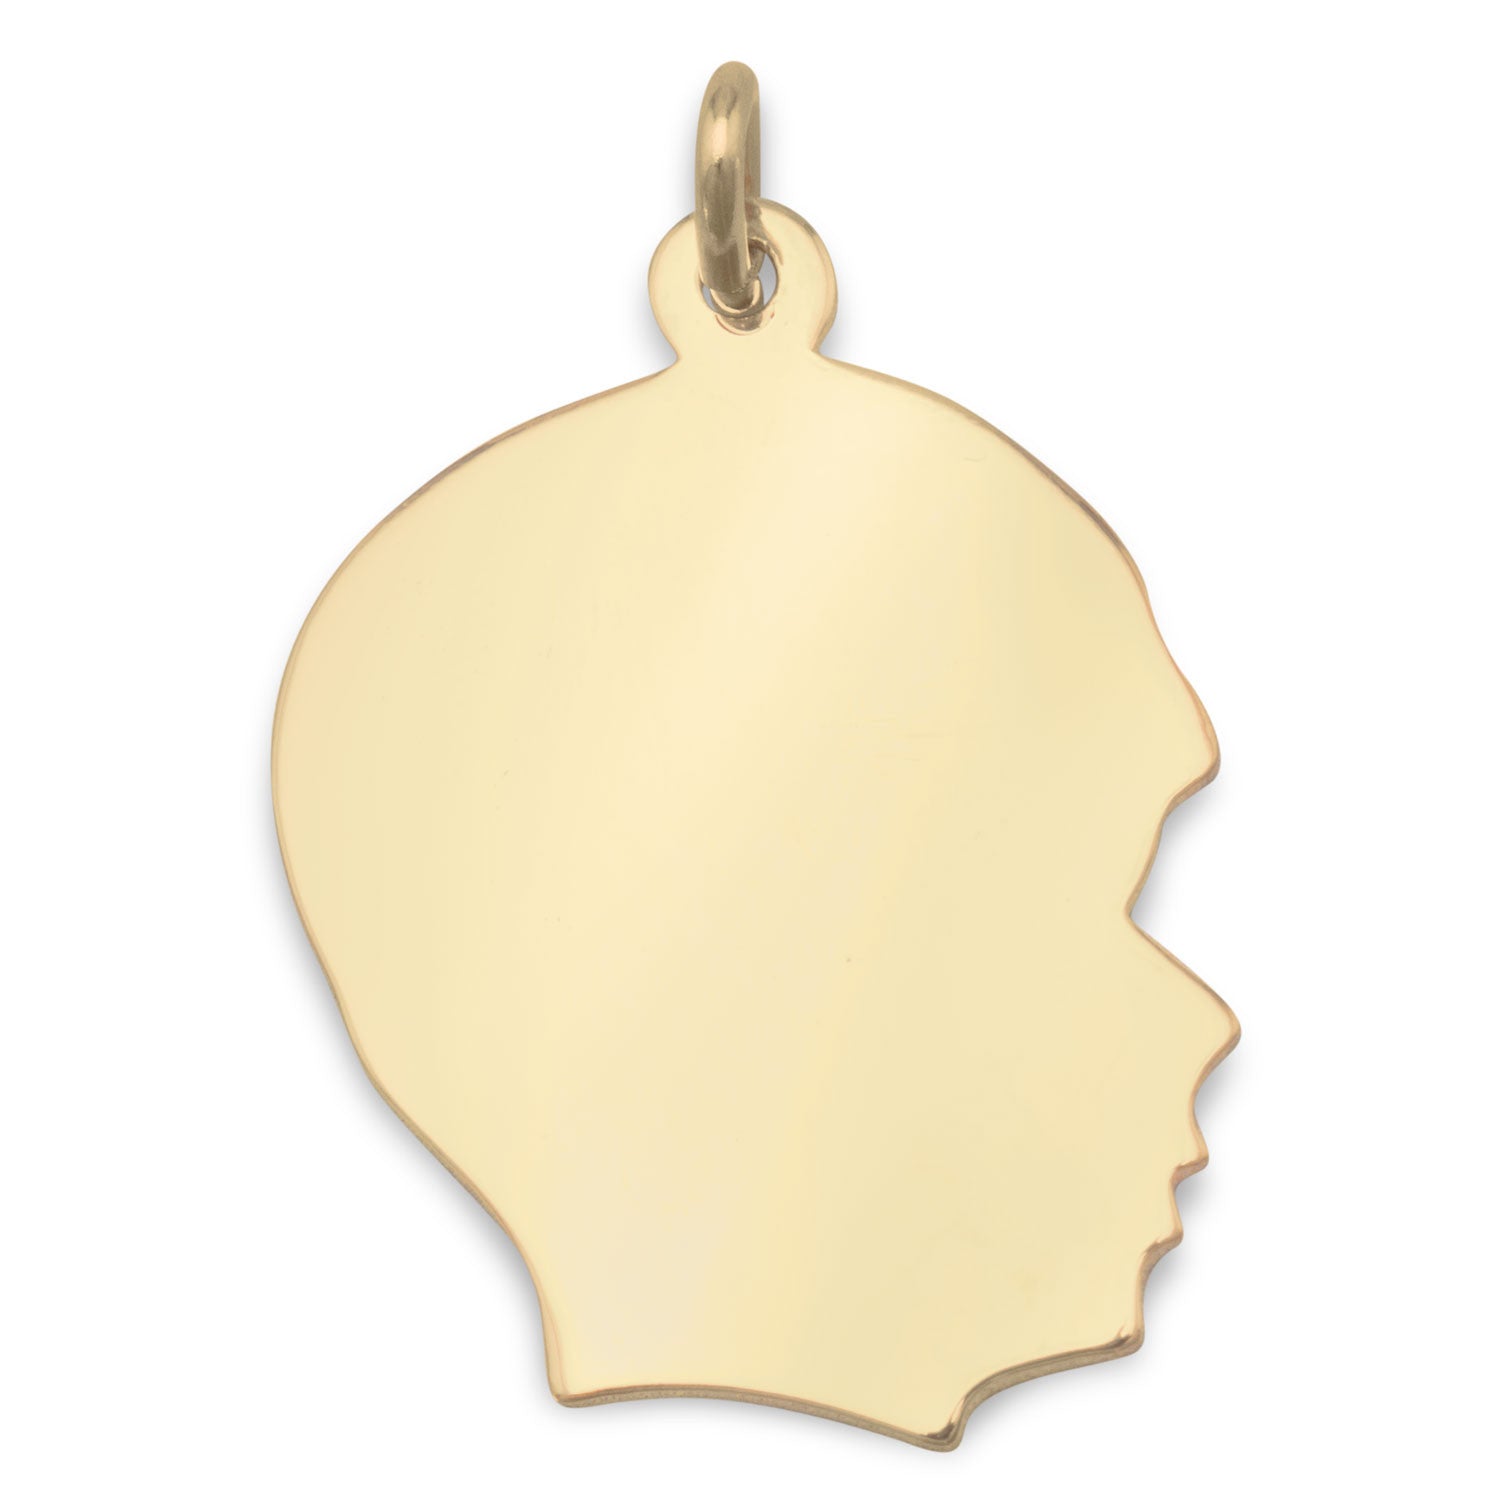 Personalized Monogram Necklace Gold Filled 14/20 / Jovial / Black Oxide